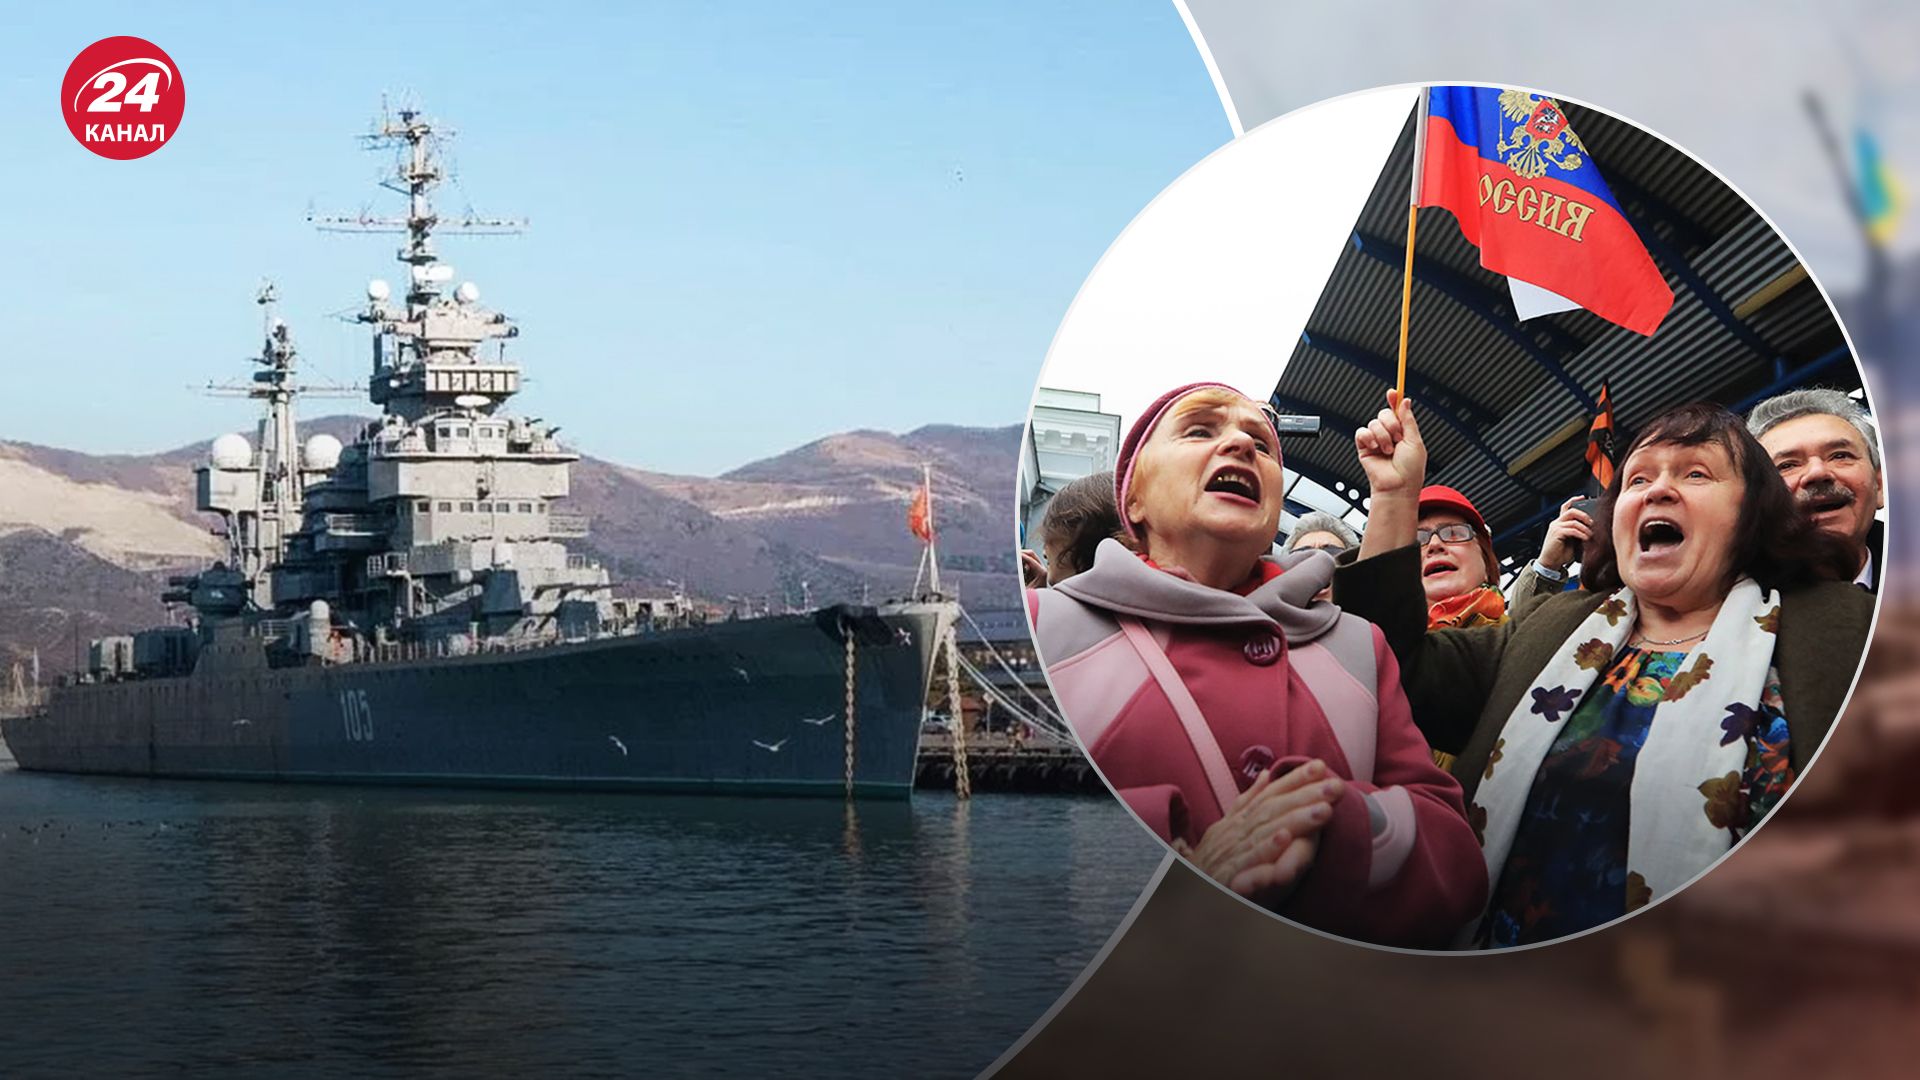 Росіяни жалілися про корабель "Оленегорський горняк"